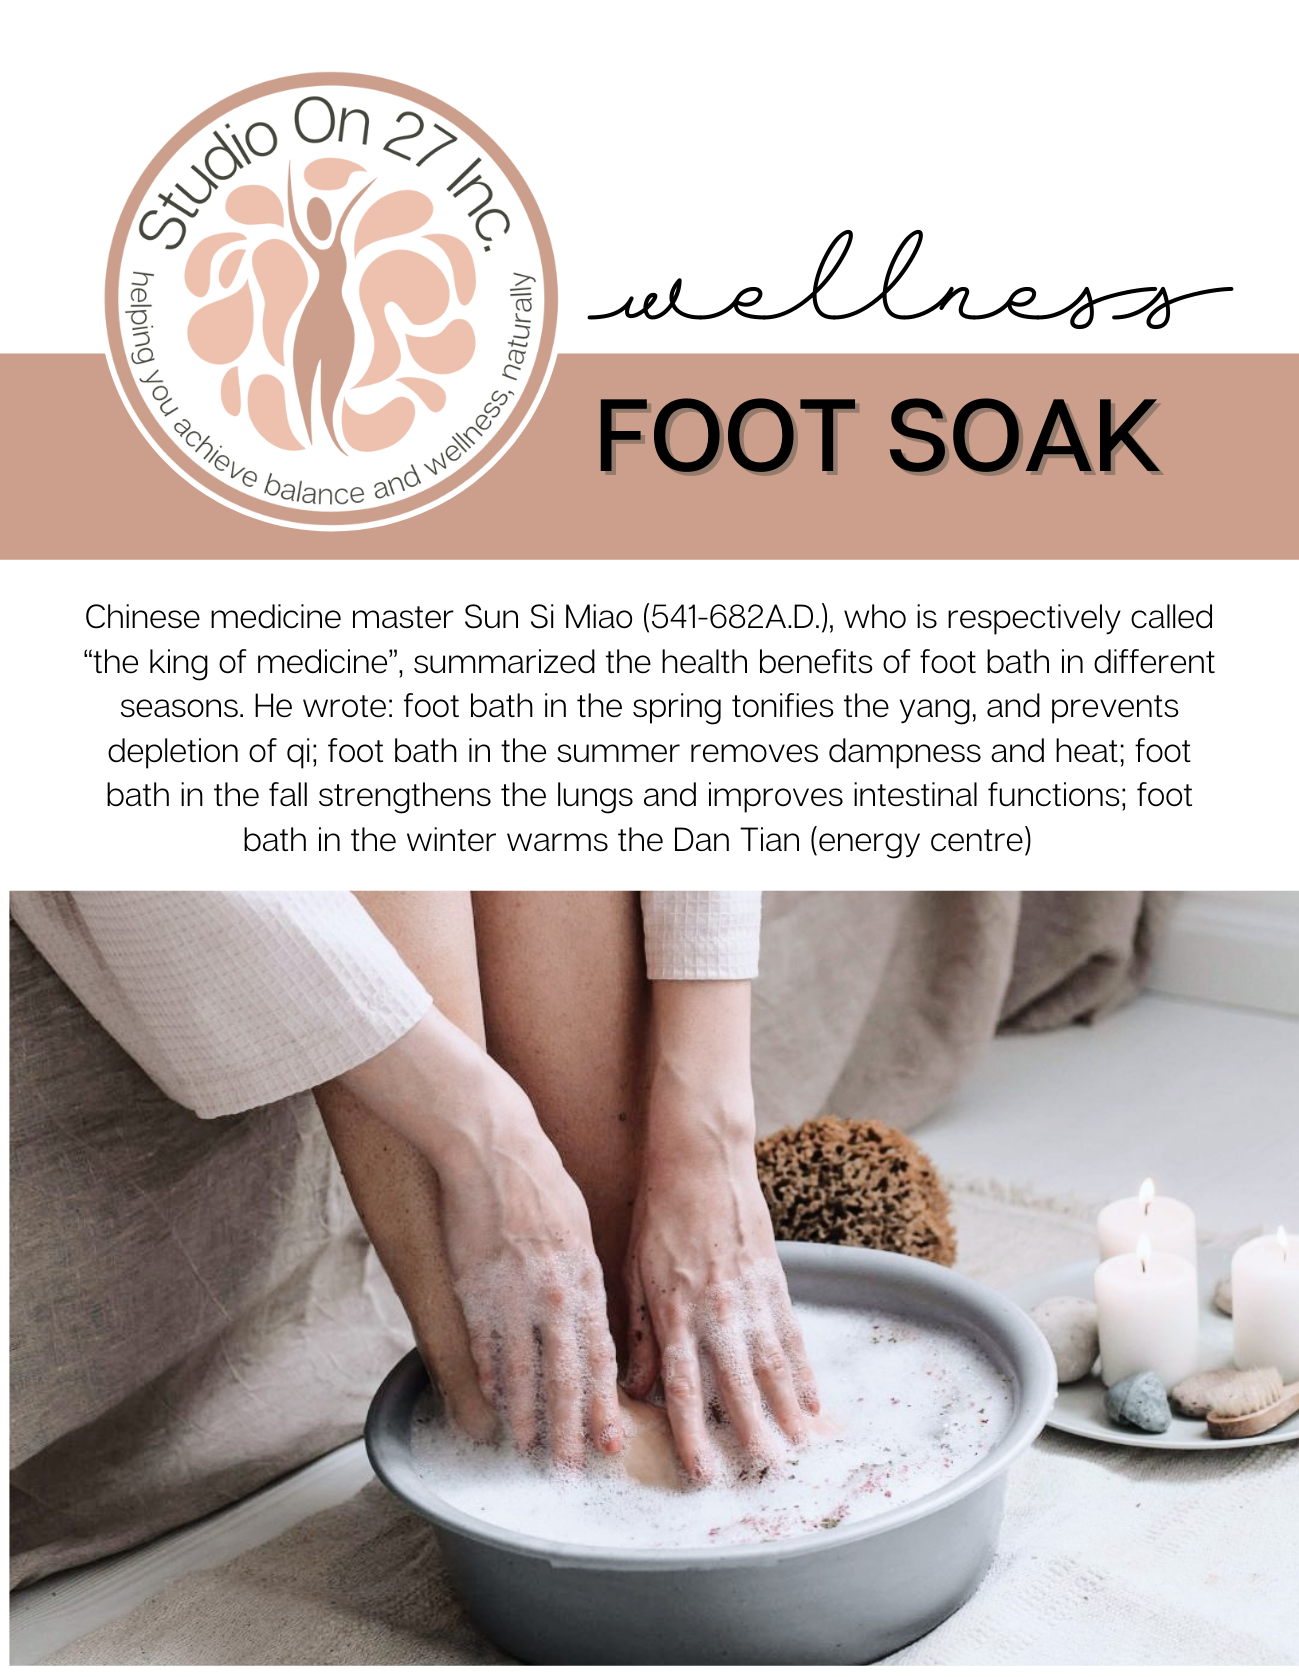 Wellness Foot Soak